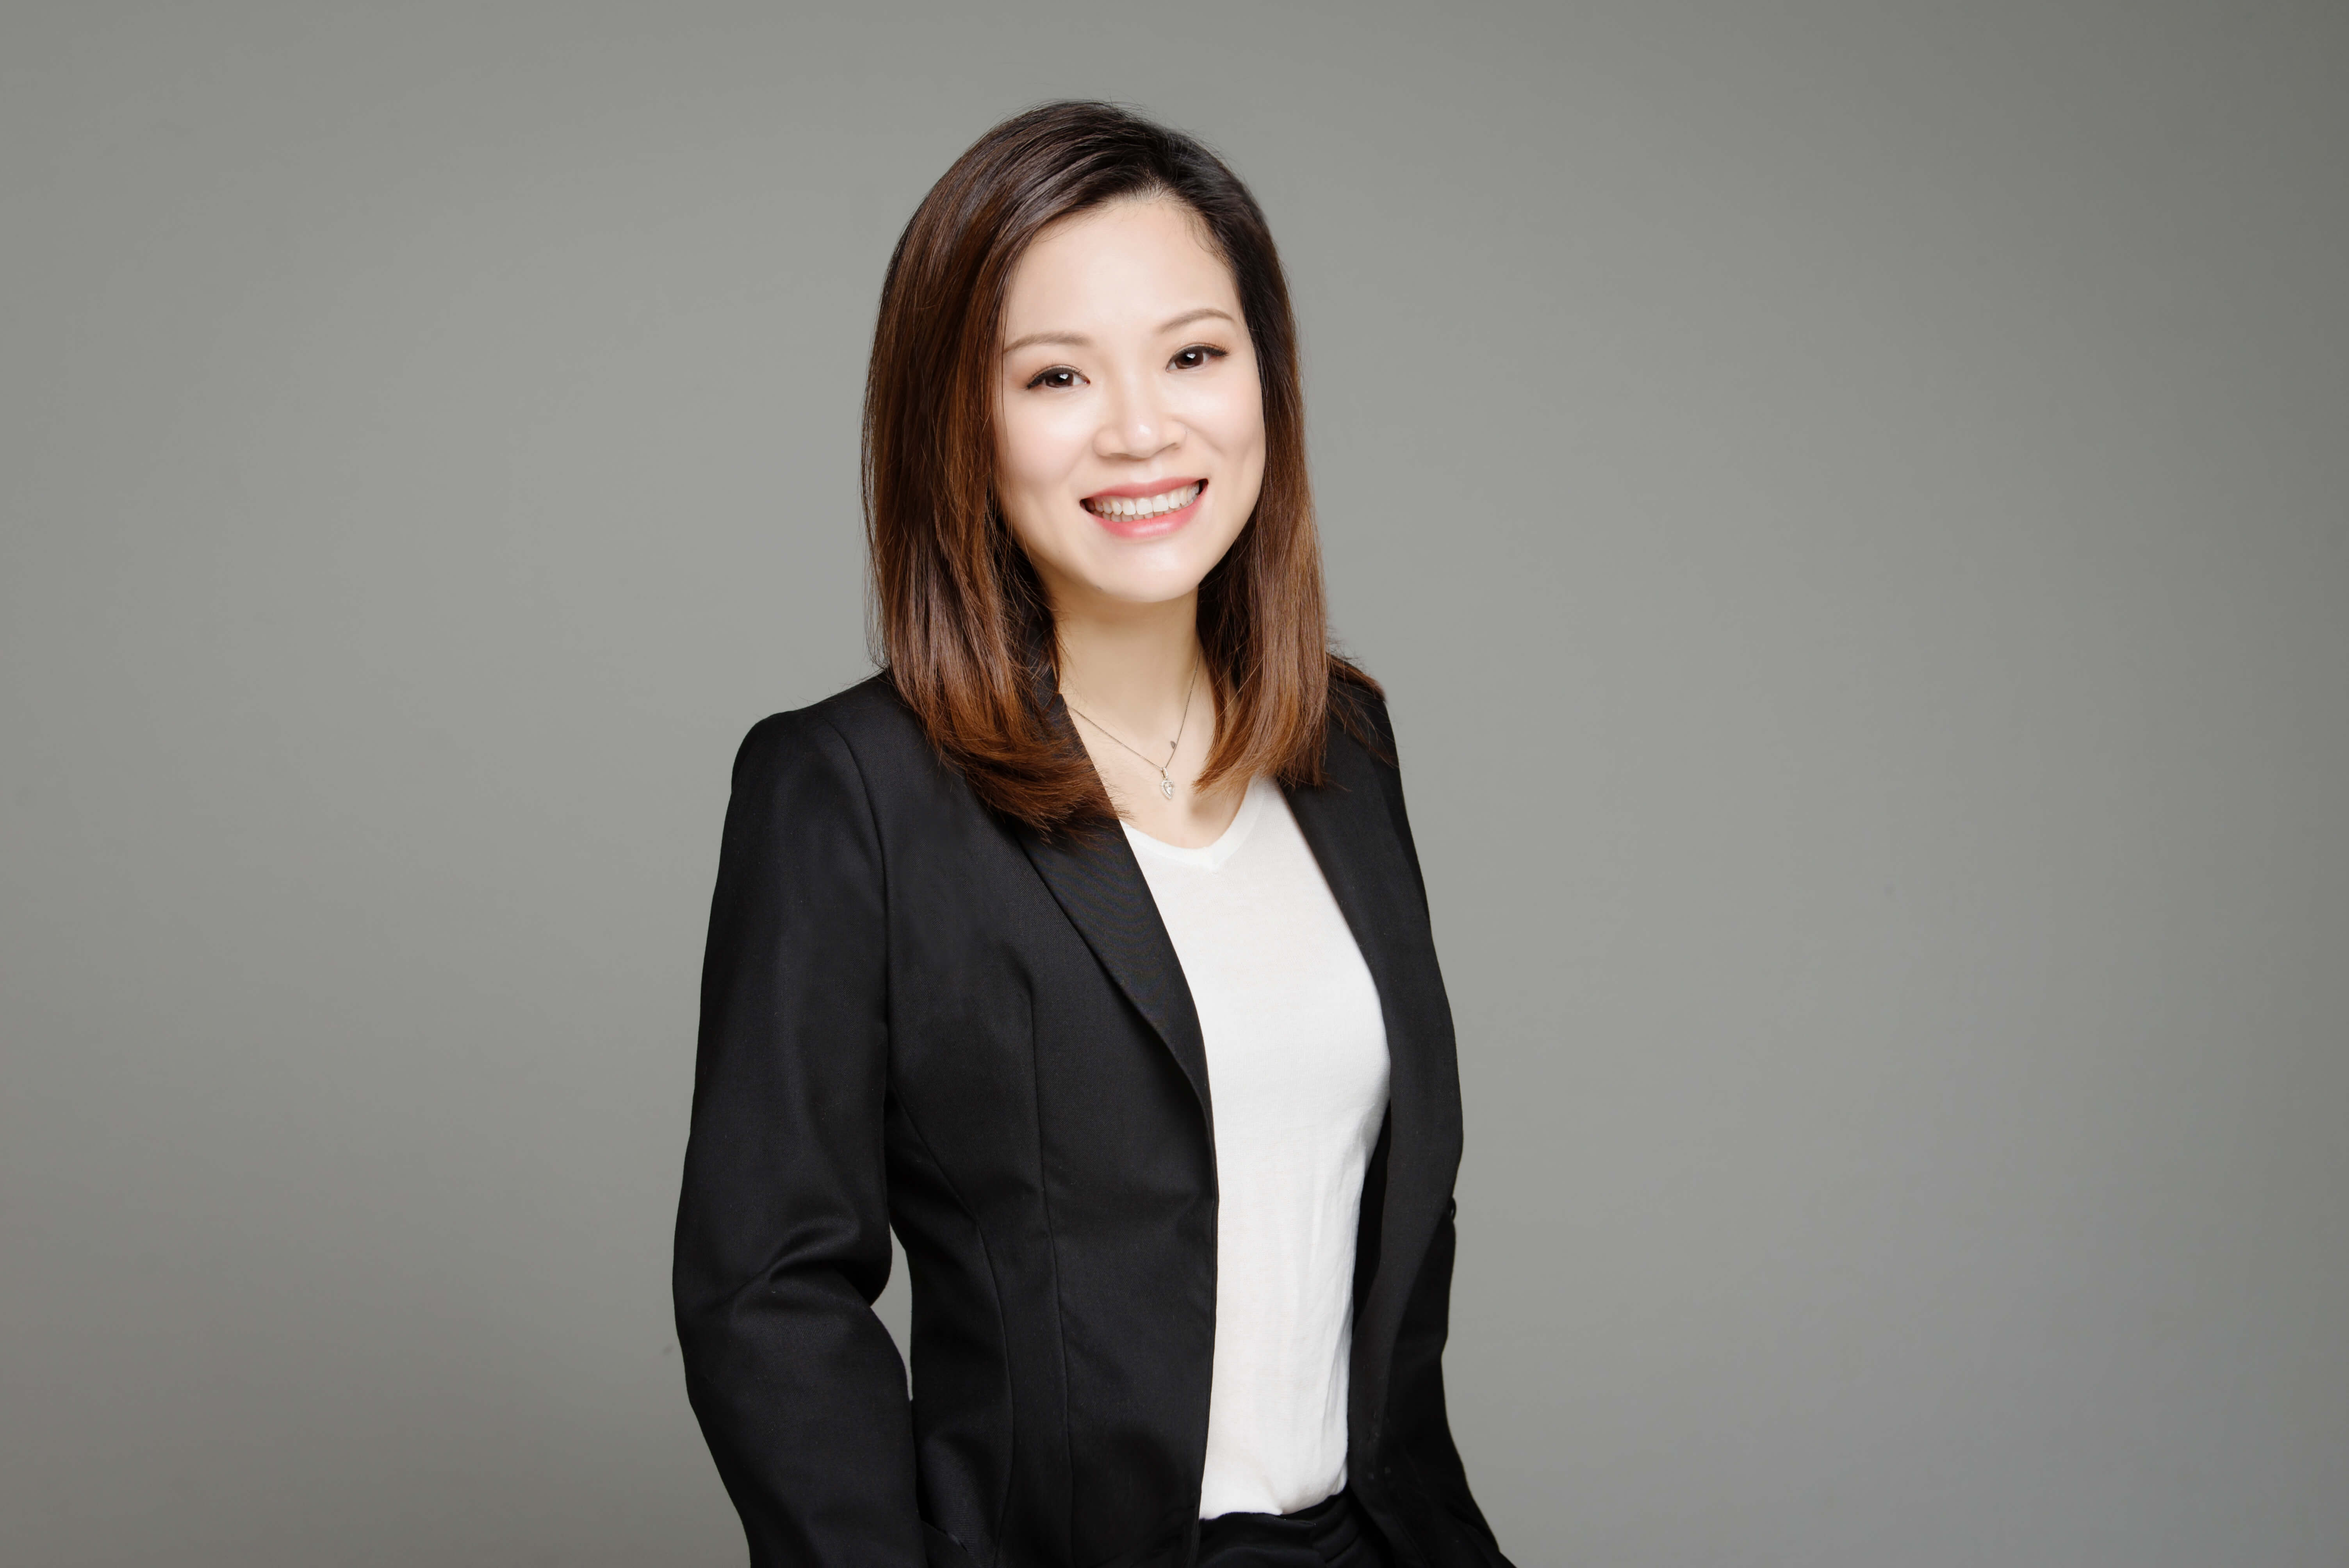 Allstate insurance agent Ava Zhou